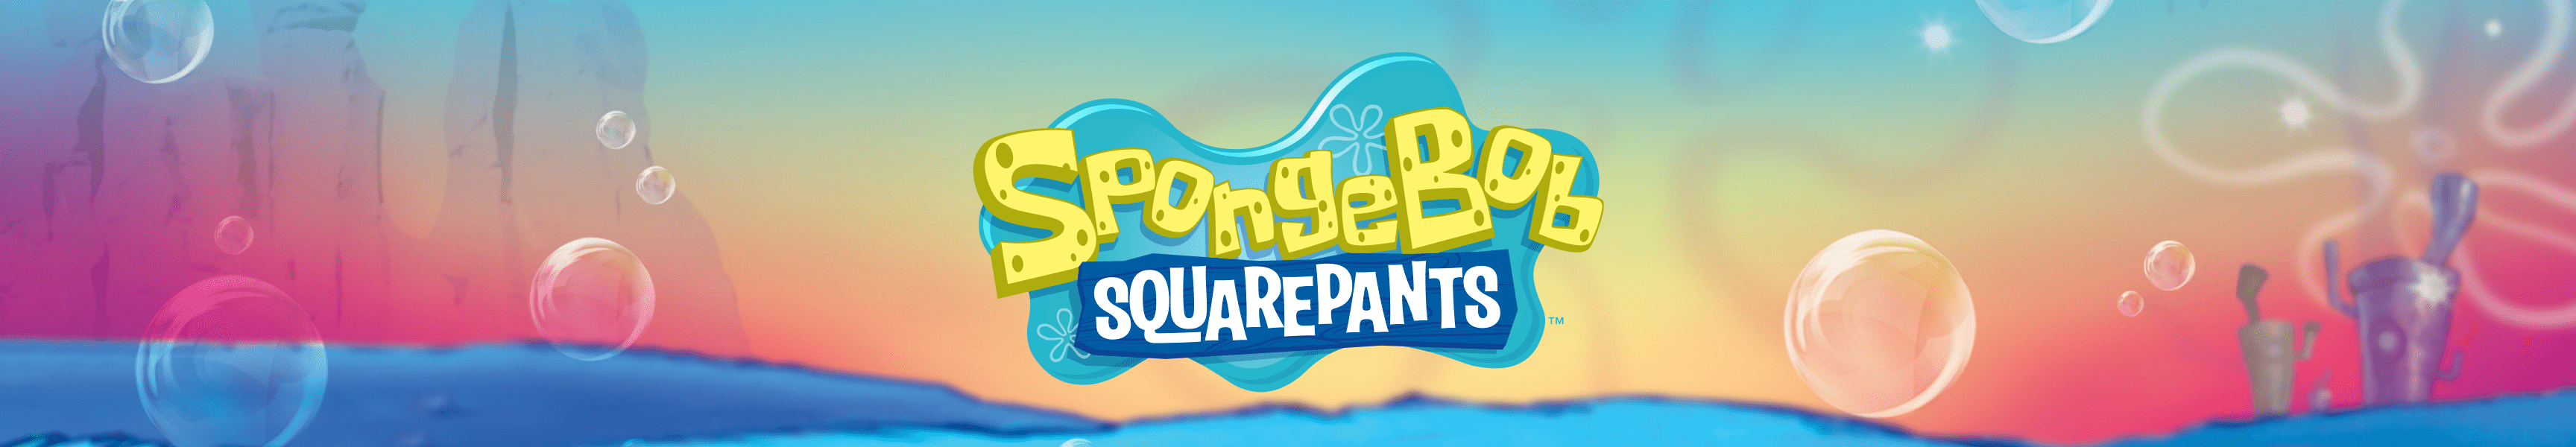 SpongeBob SquarePants Phone Cases